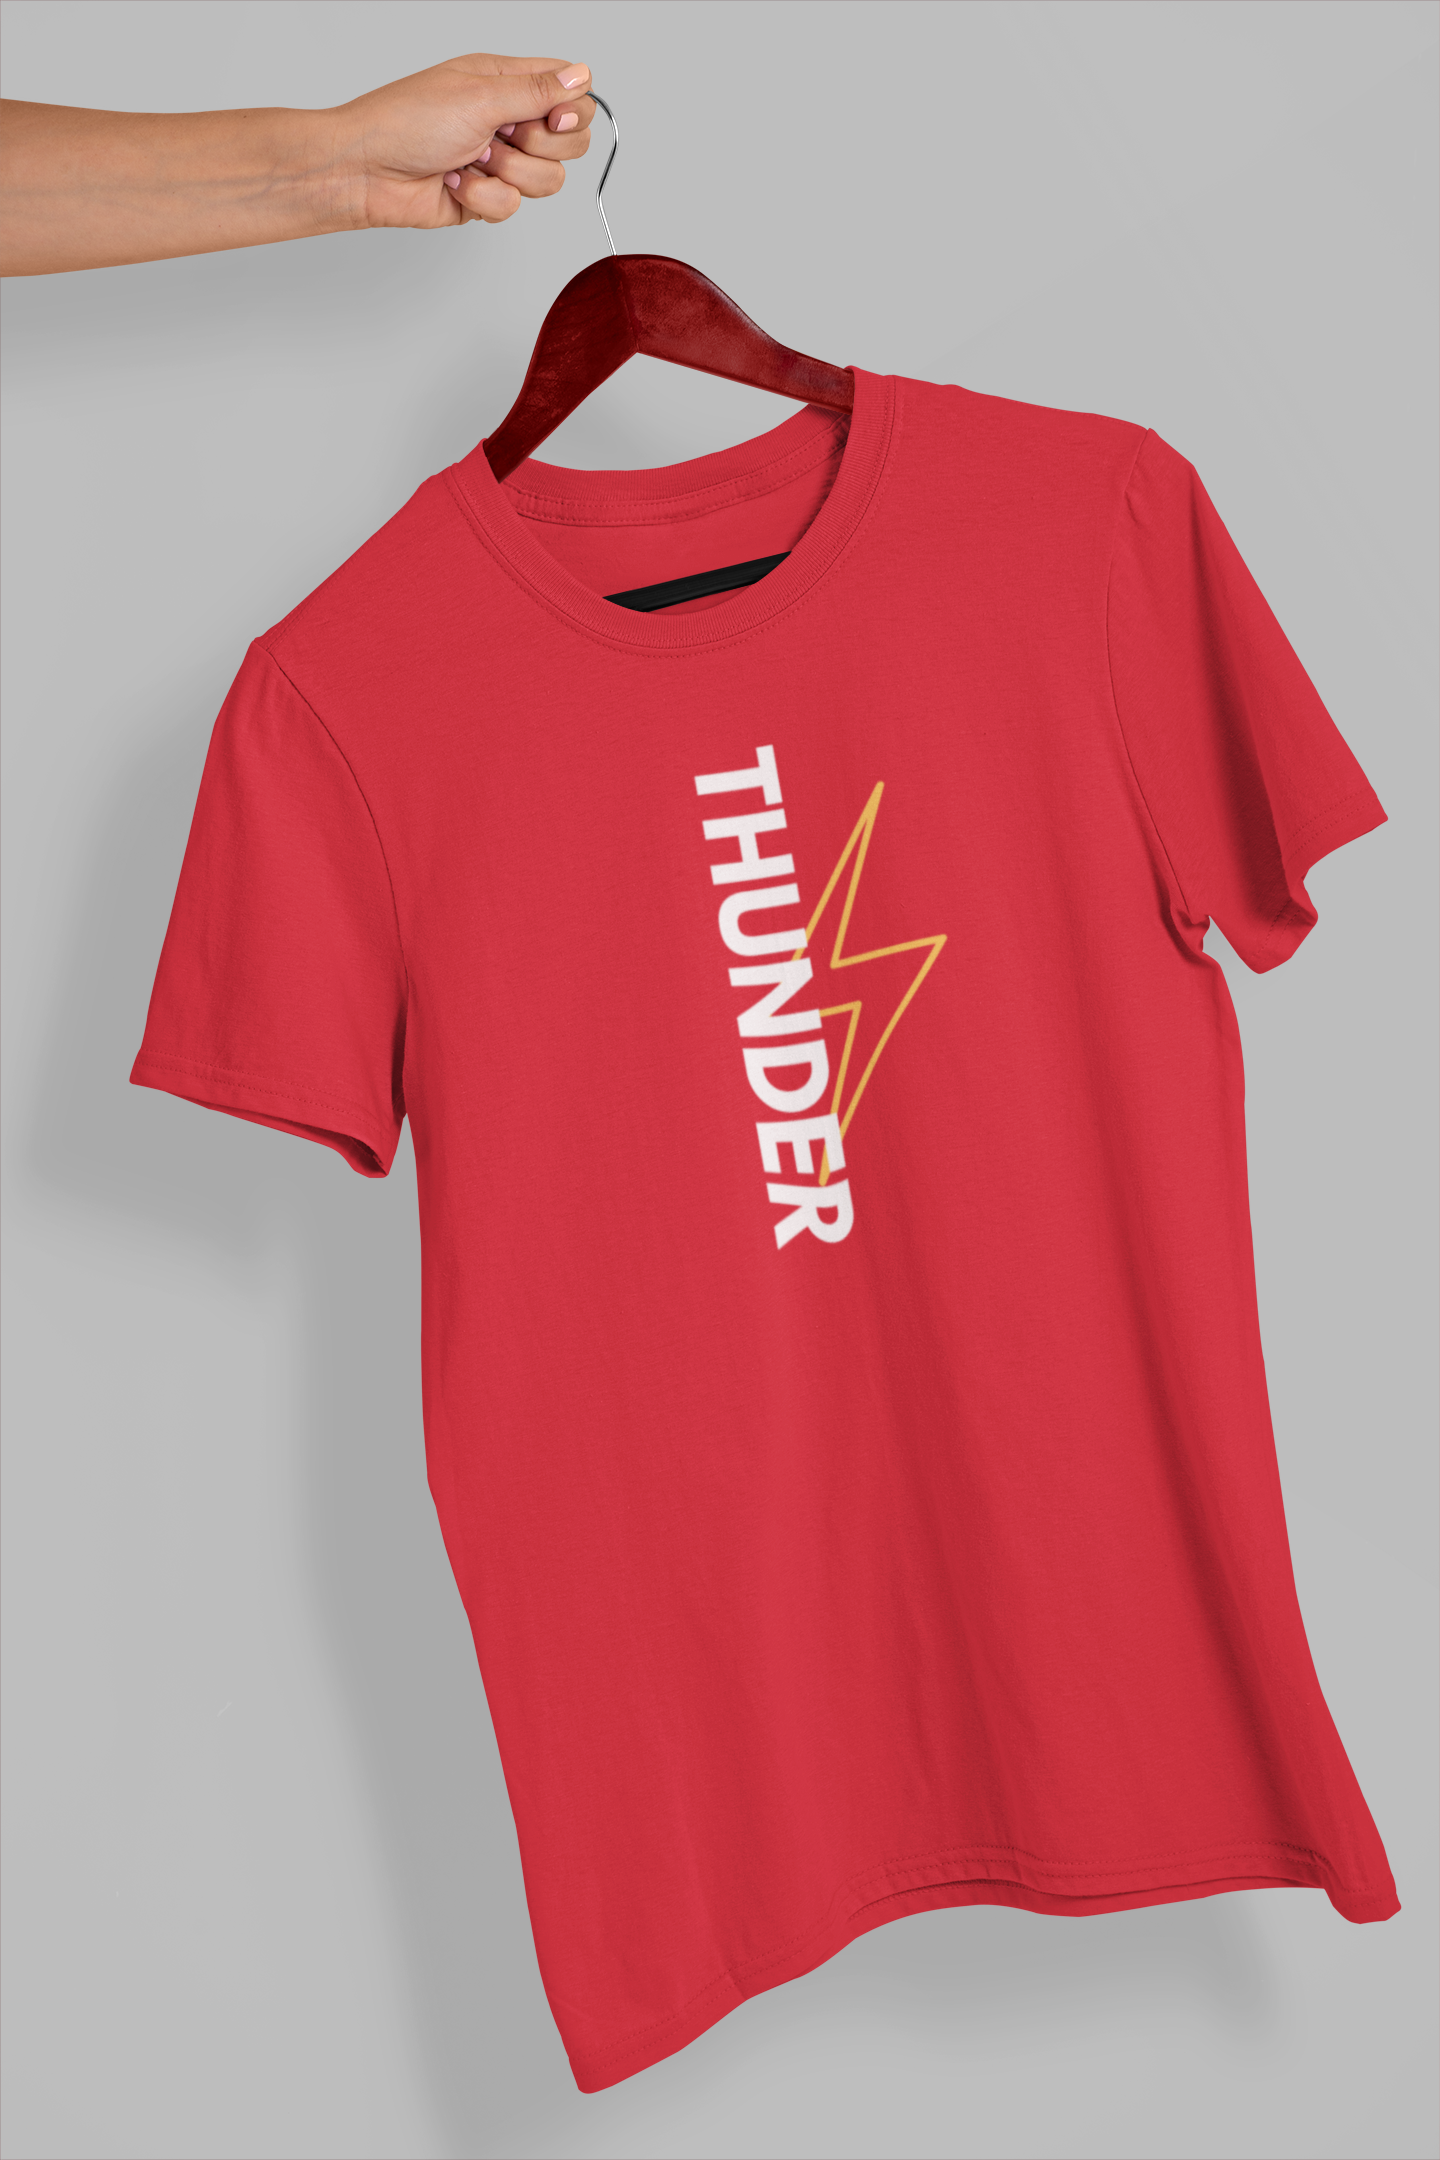 Thunder - Gym T Shirt Strong Soul Shirts & Tops